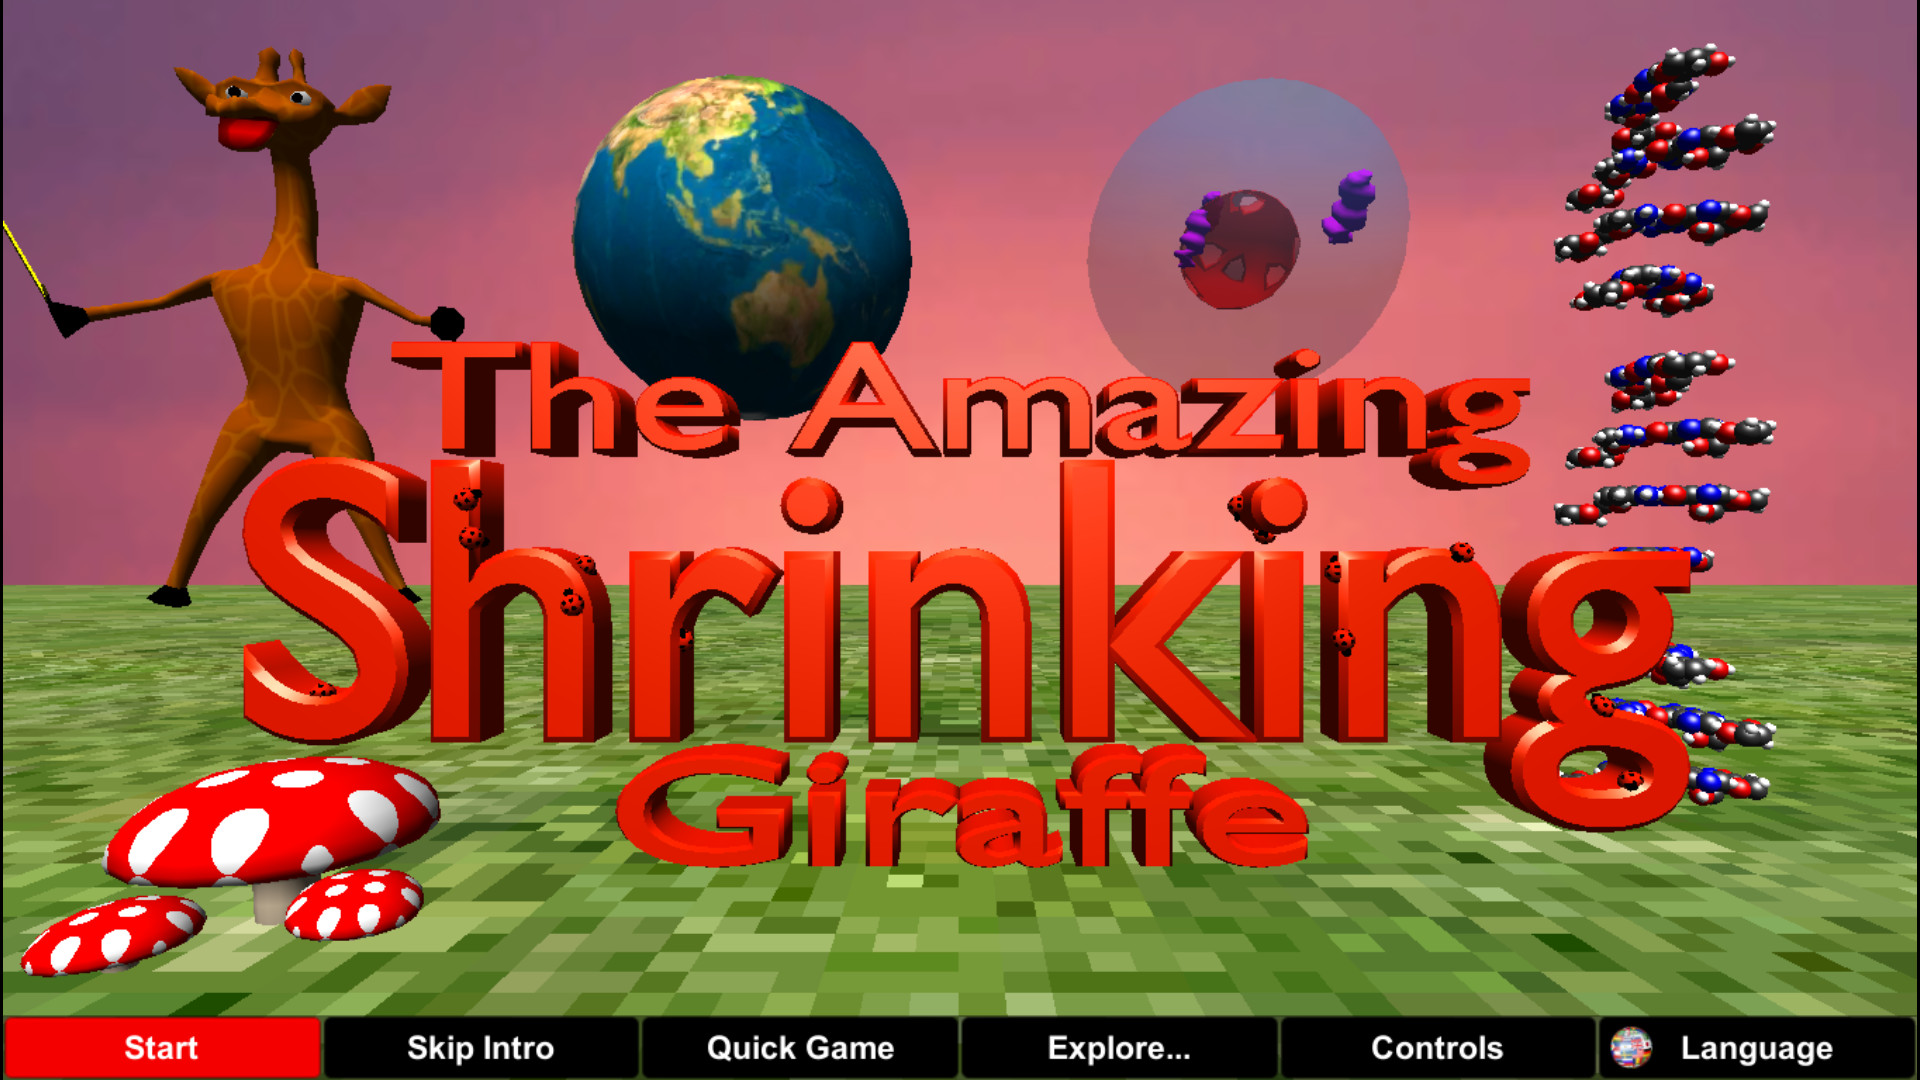 The Amazing Shrinking Giraffe Free Download